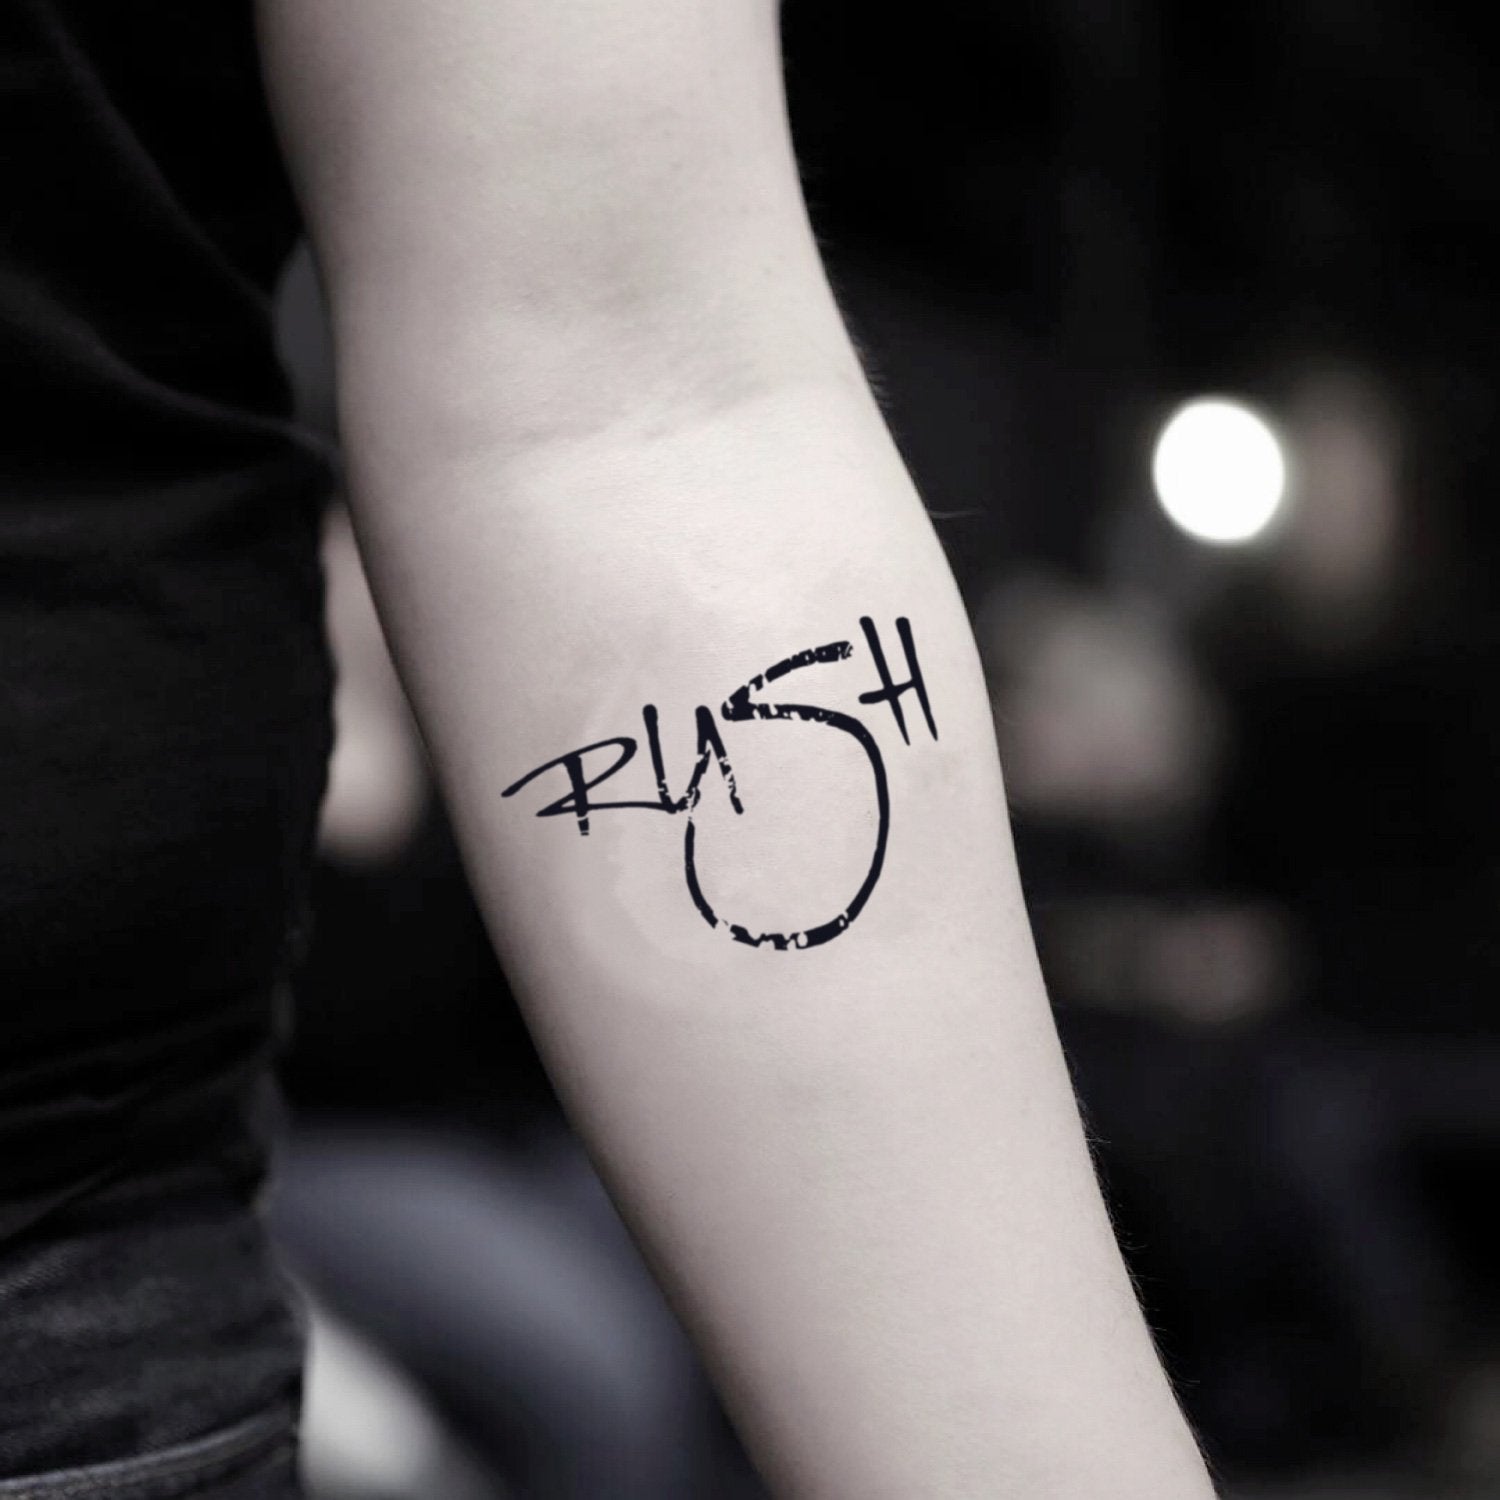 fake small rush lettering temporary tattoo sticker design idea on inner arm